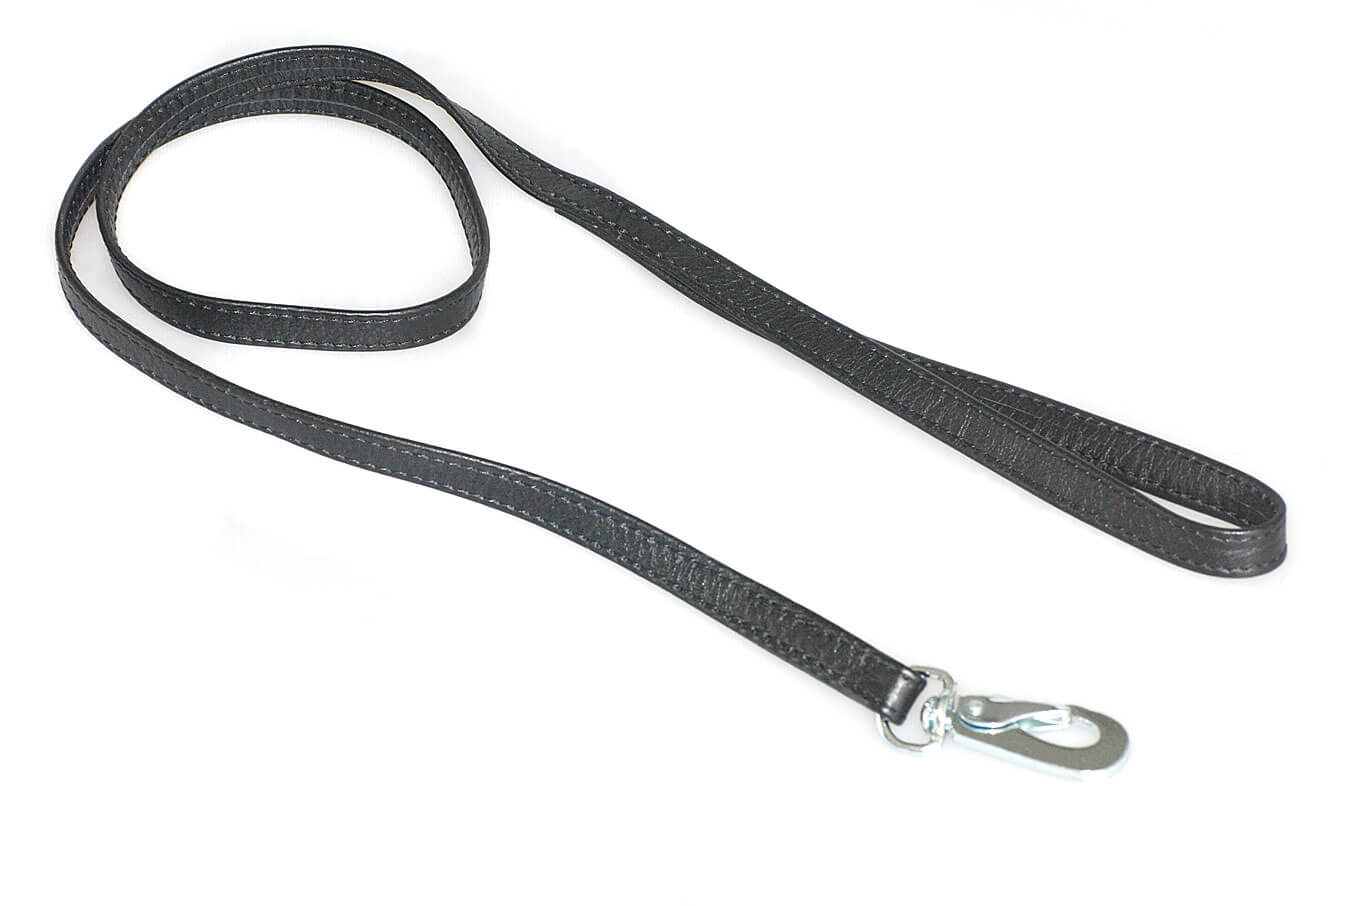 Soft black nappa leather double folded stitched dog lead